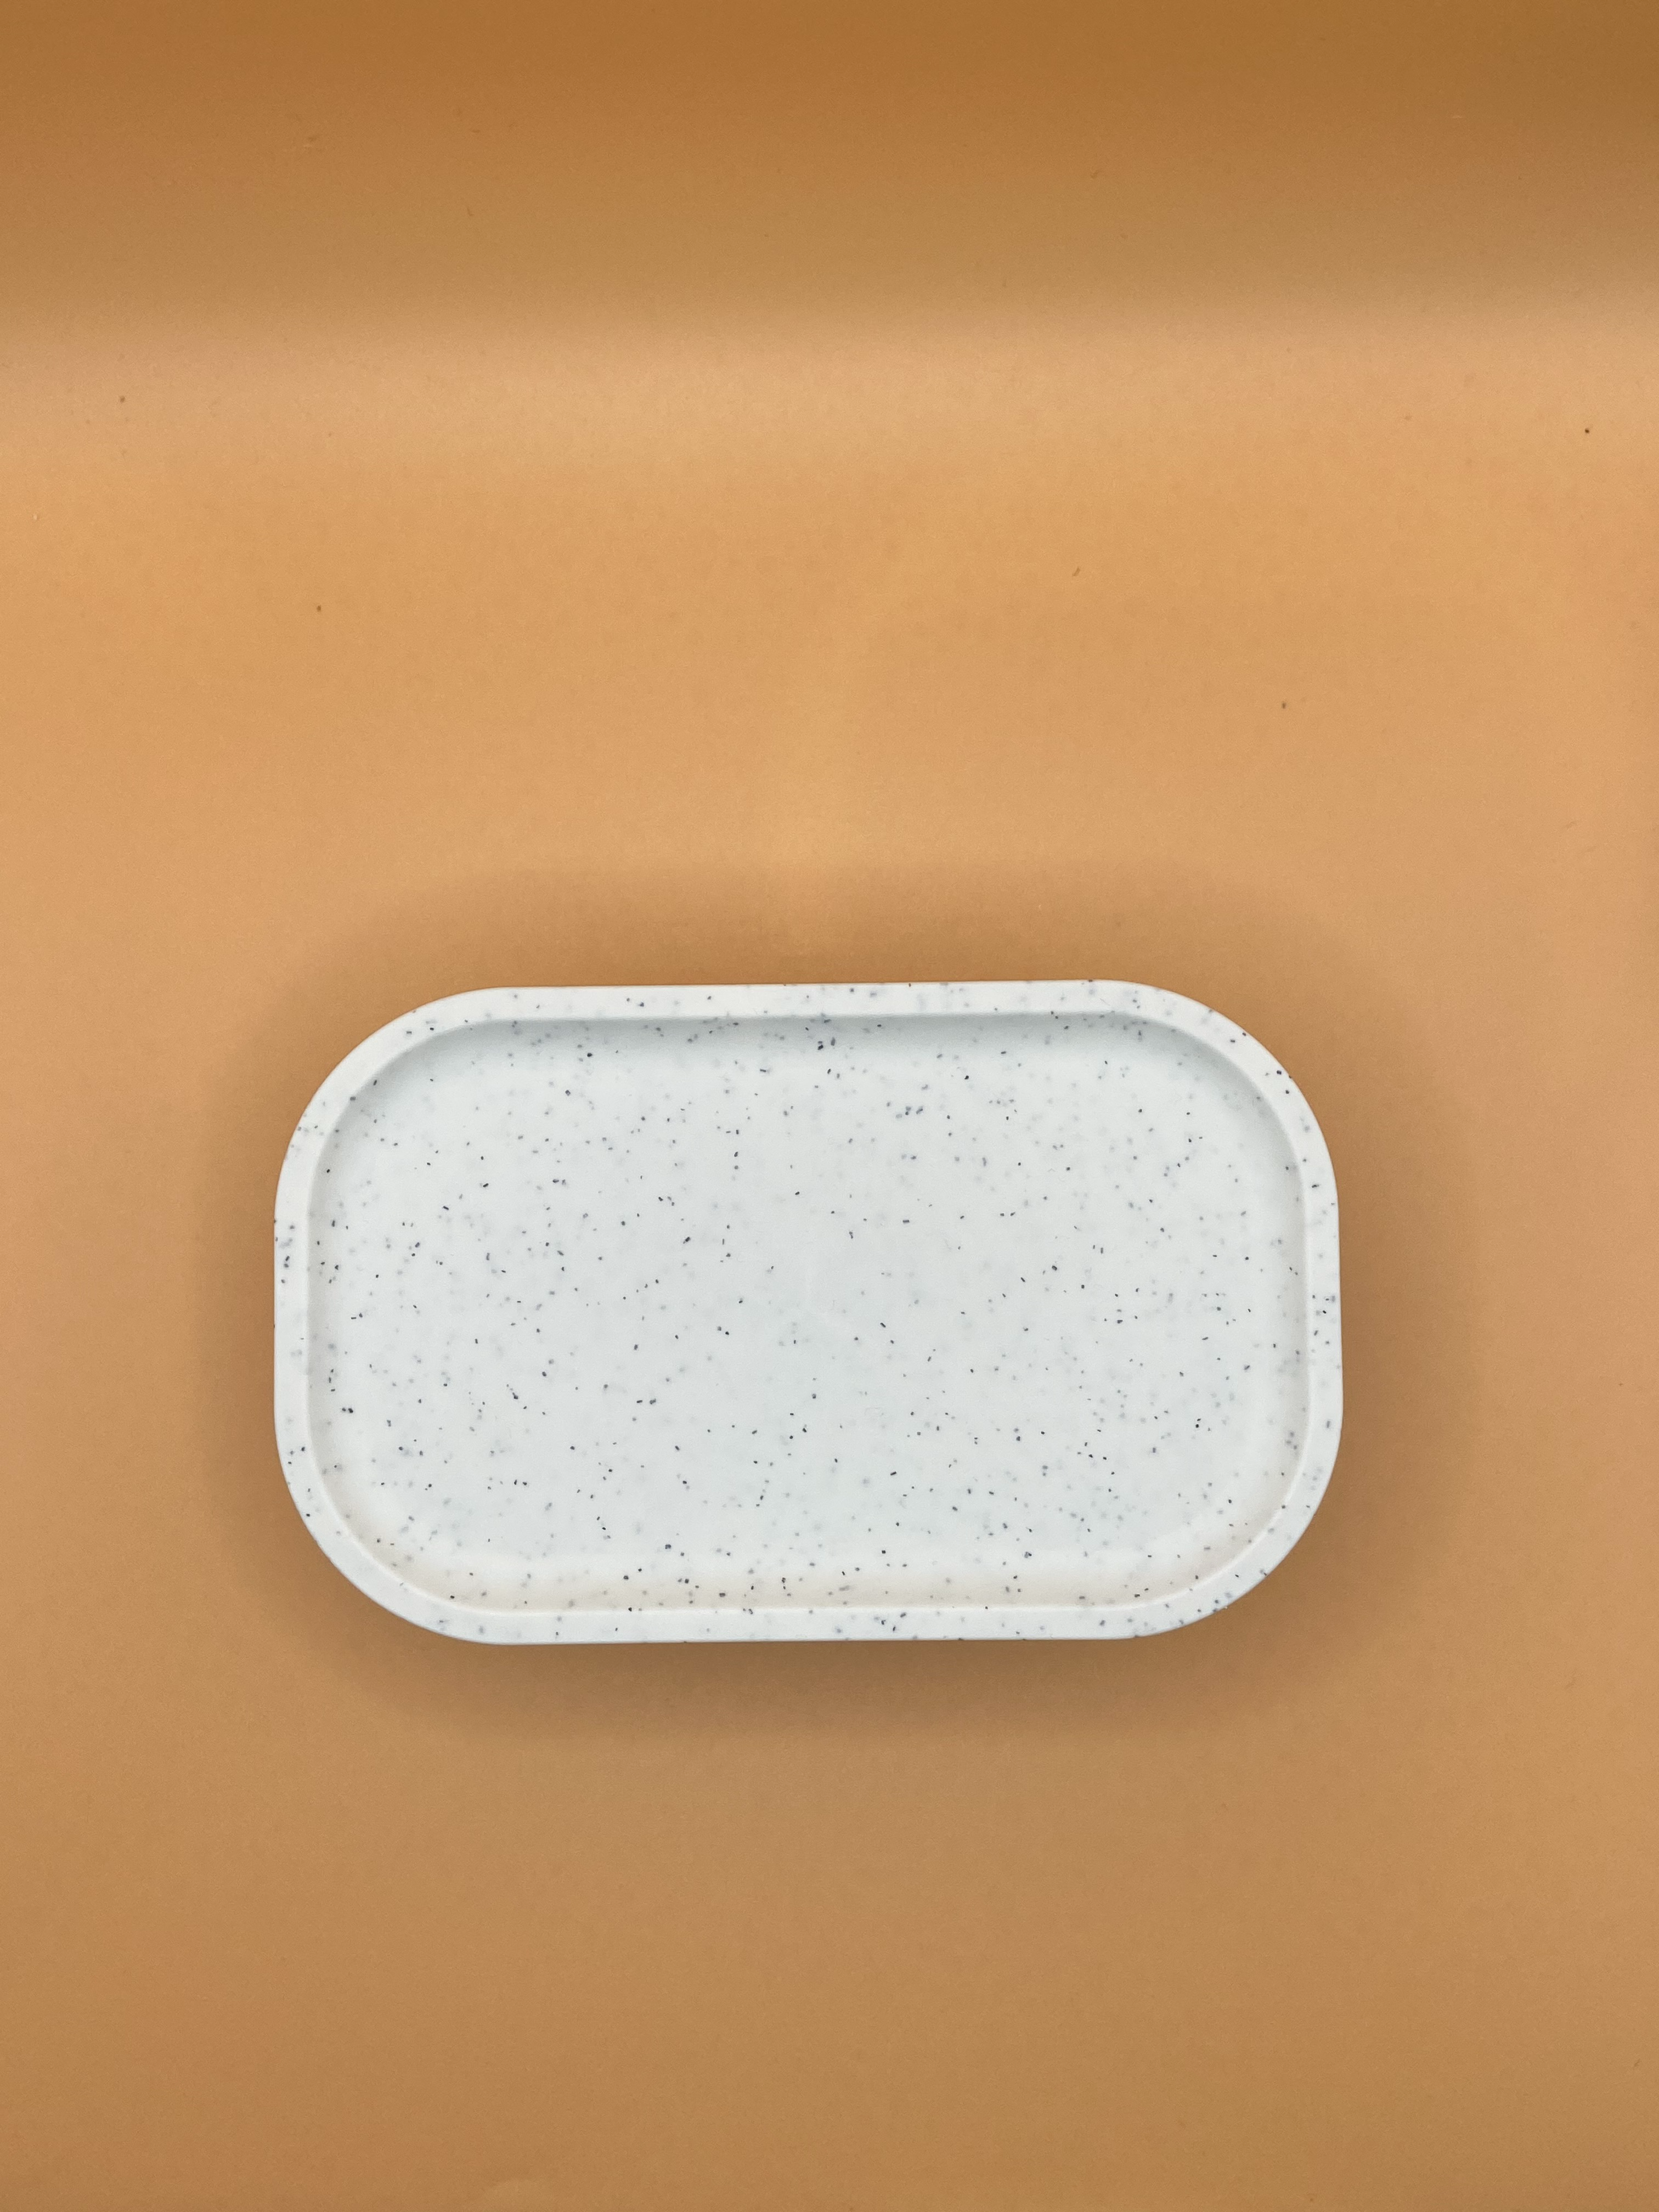 Travel soap box (white; top view)